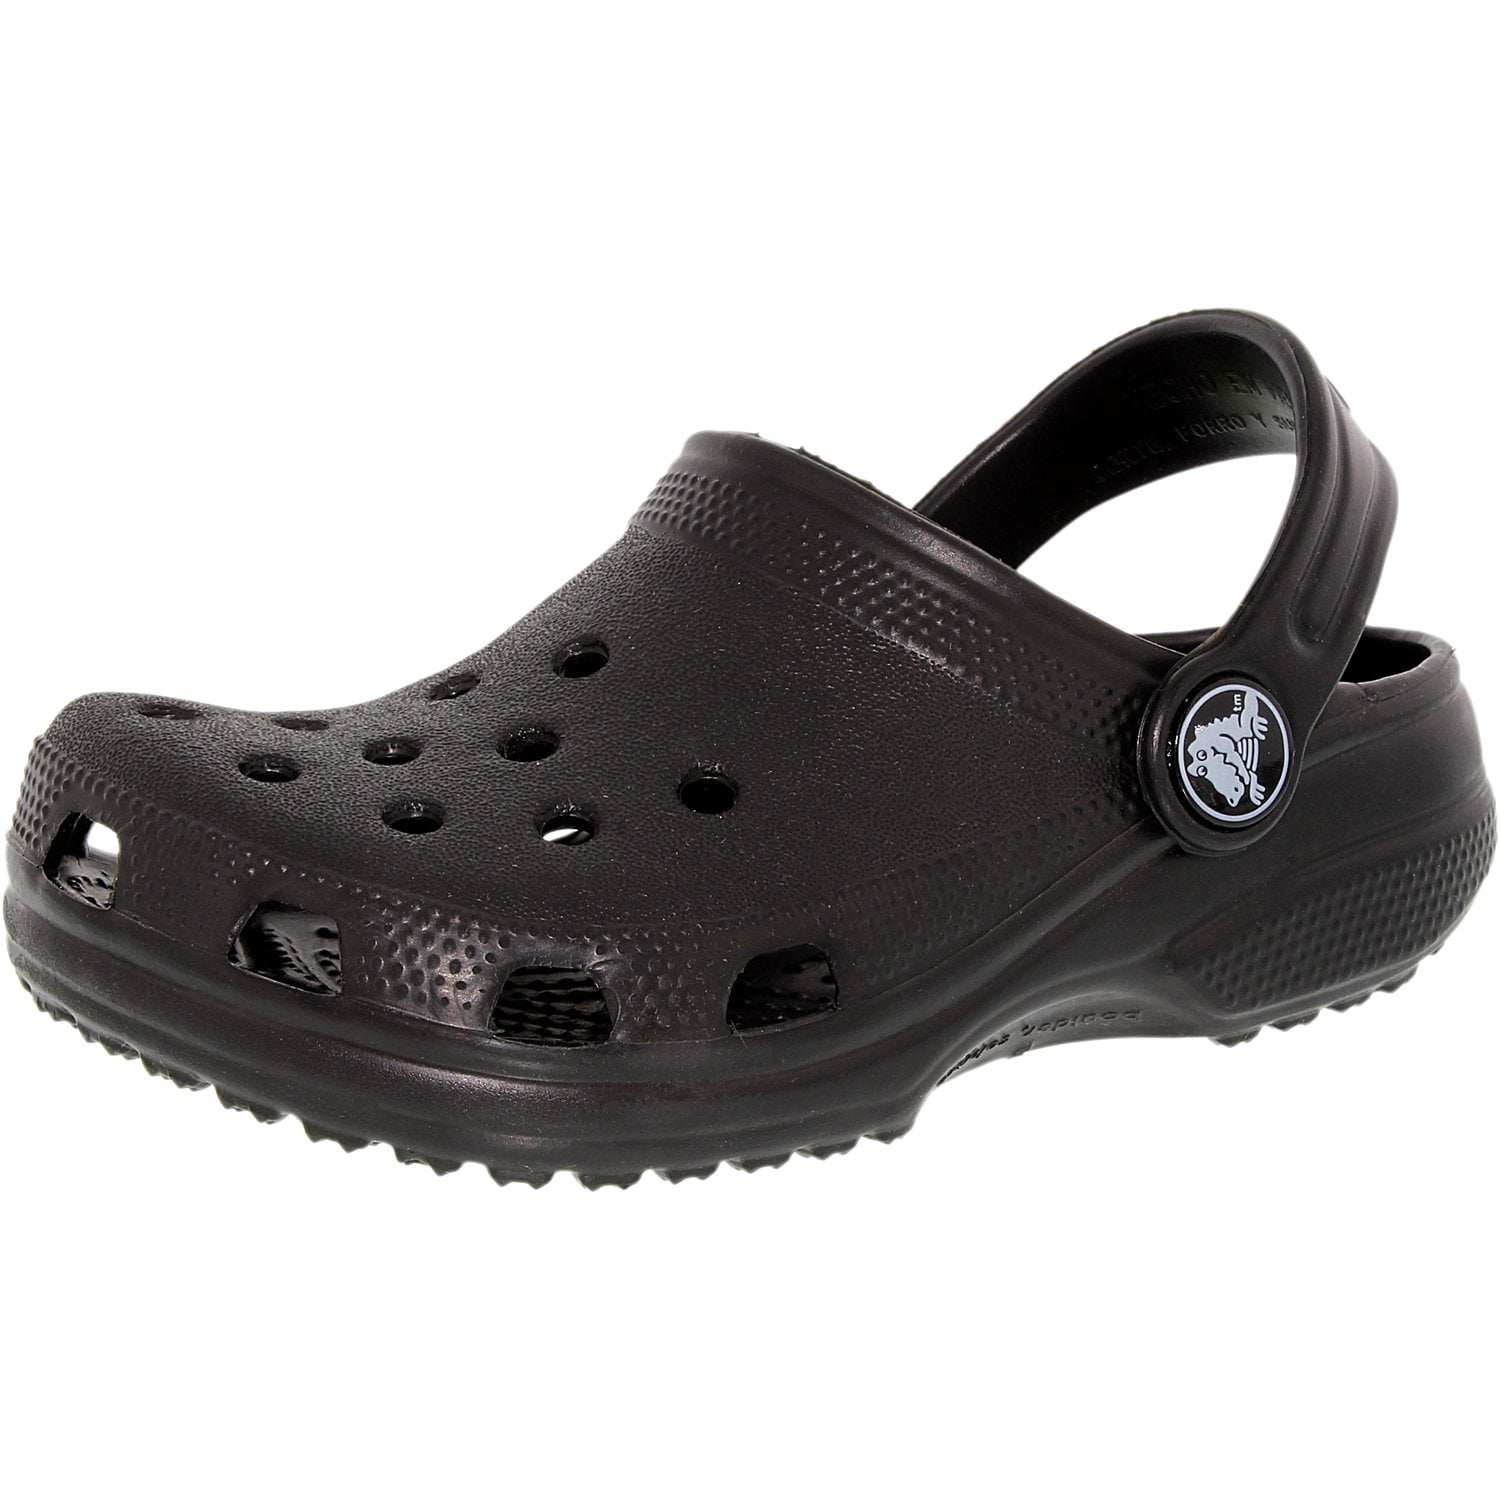 Crocs Girl's Kids Classic Black Ankle-High Rubber Flat Shoe - 12M ...